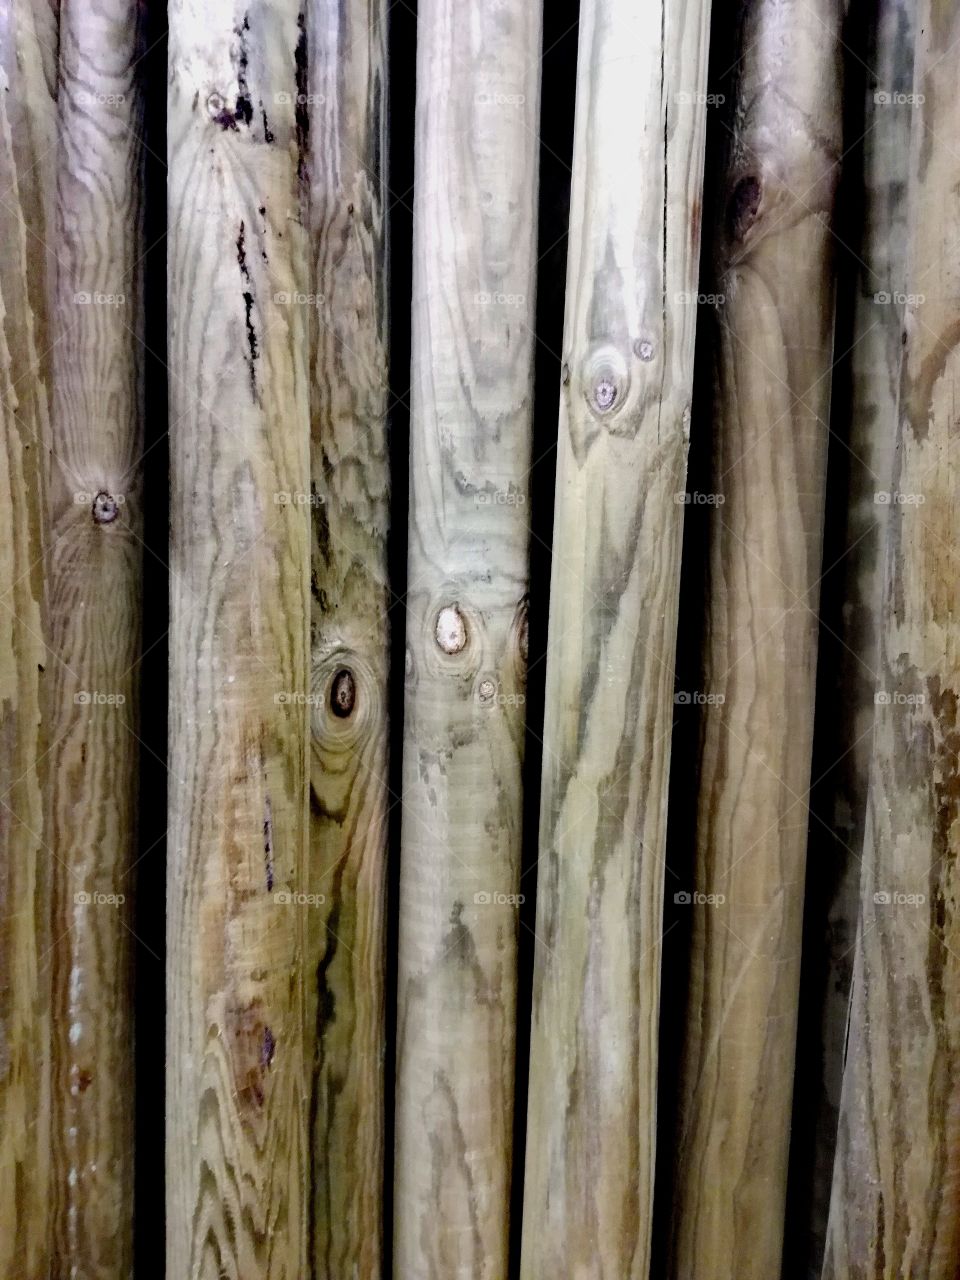 The wooden sticks